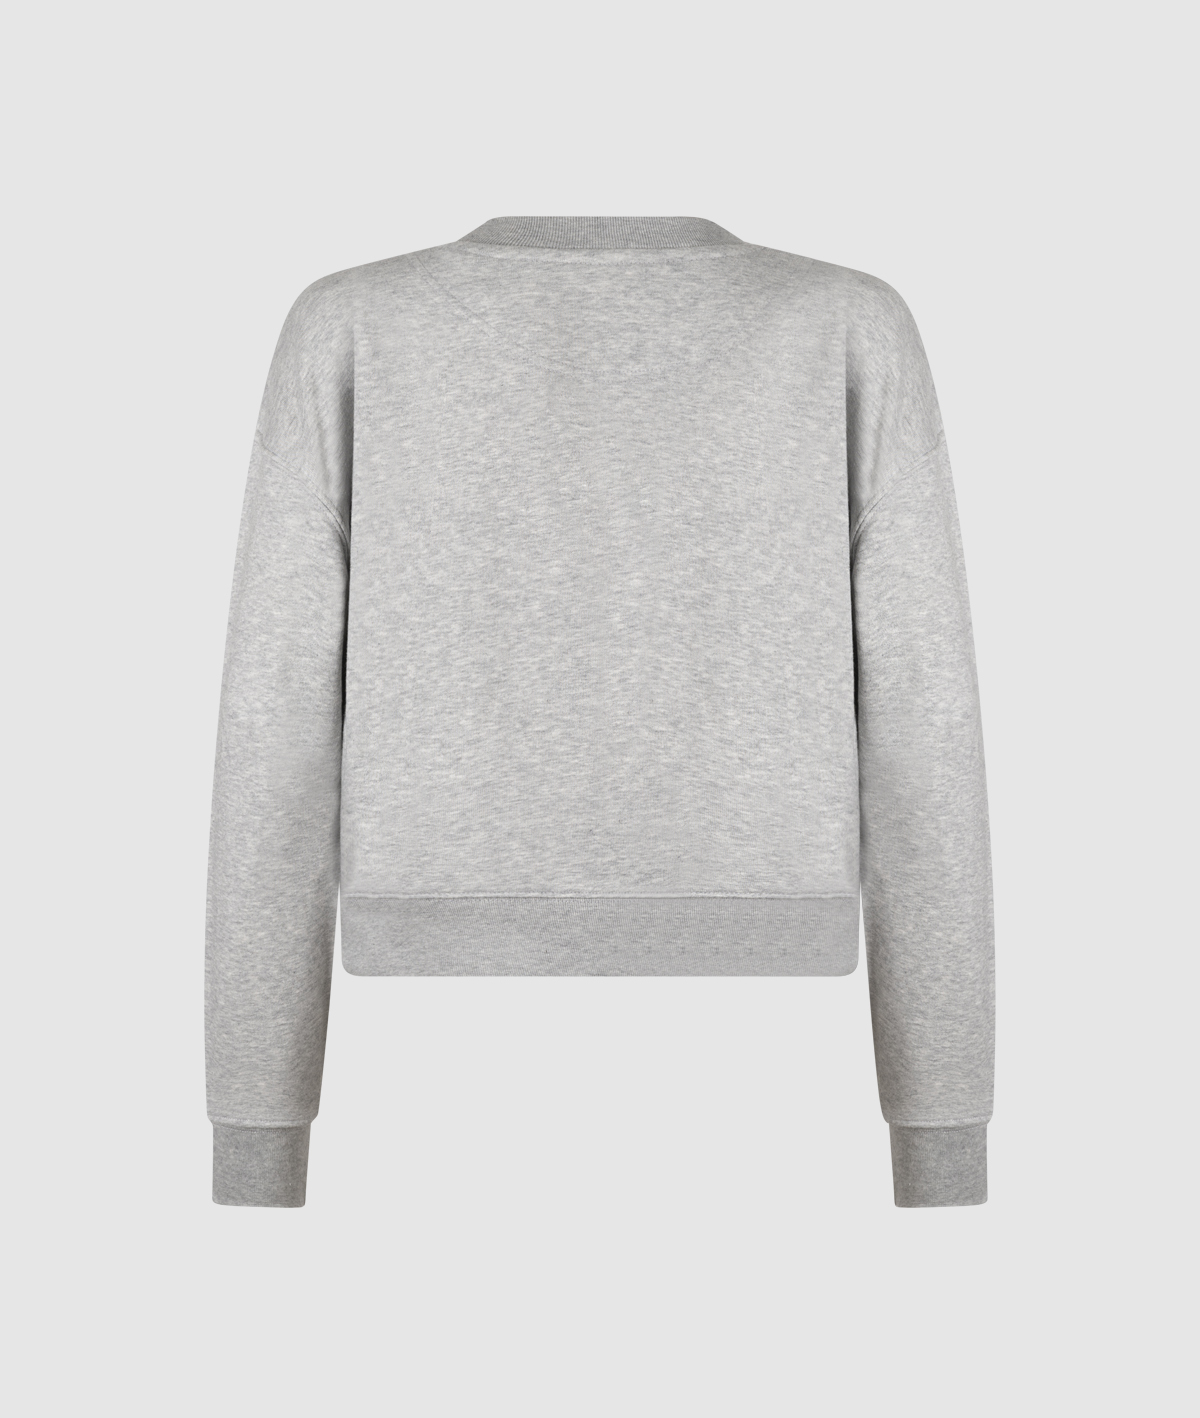 Stella Cropster IEU Sweatshirt. Heather grey colour back